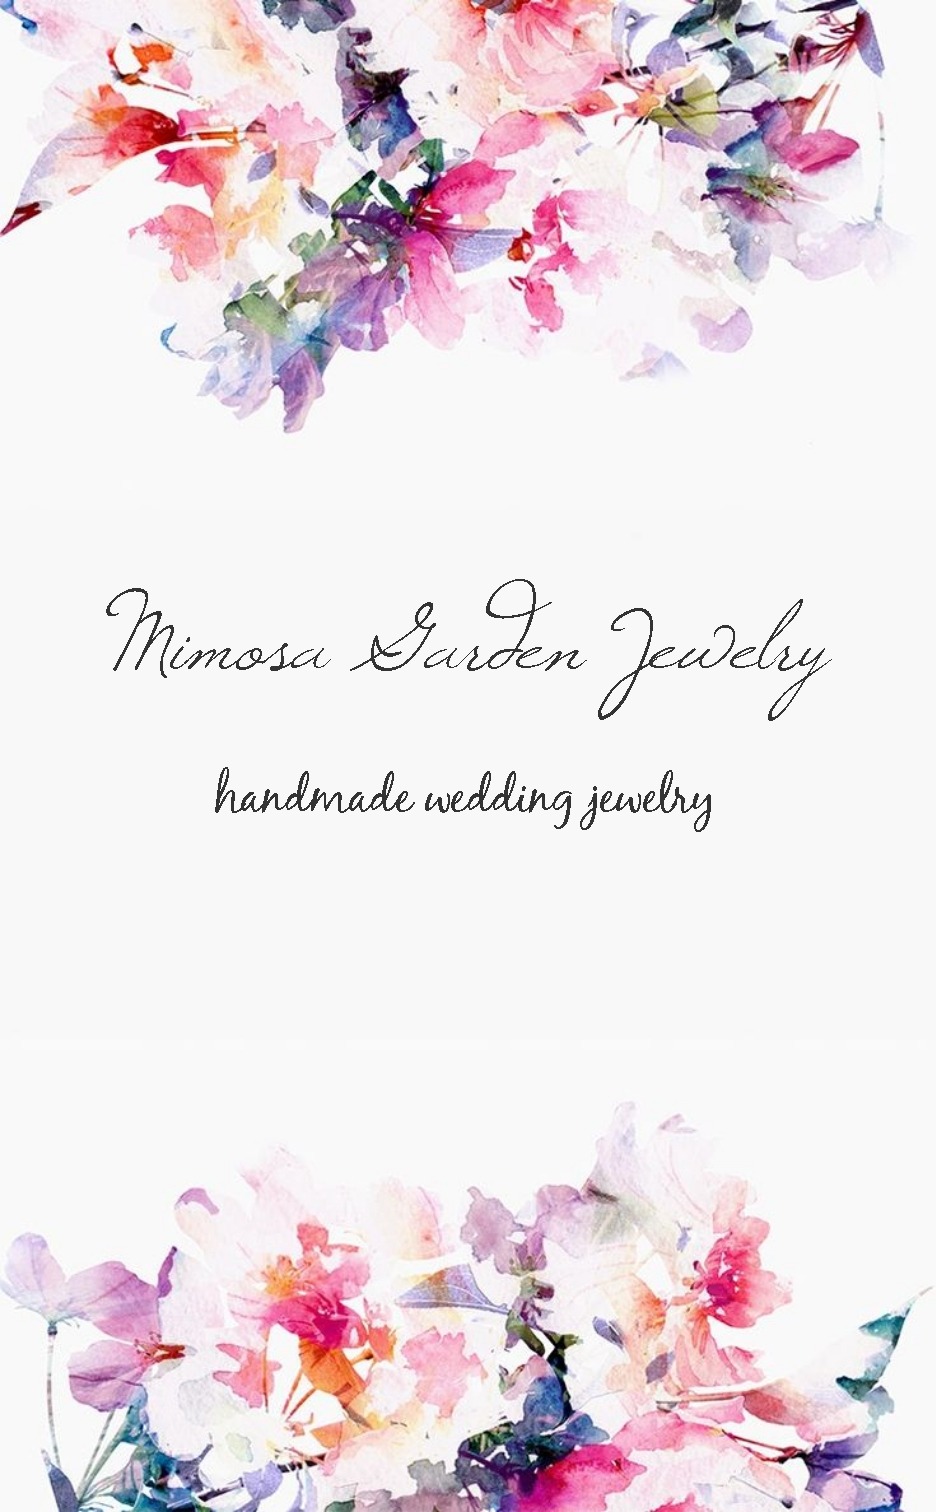 Mimosa Garden jewelry